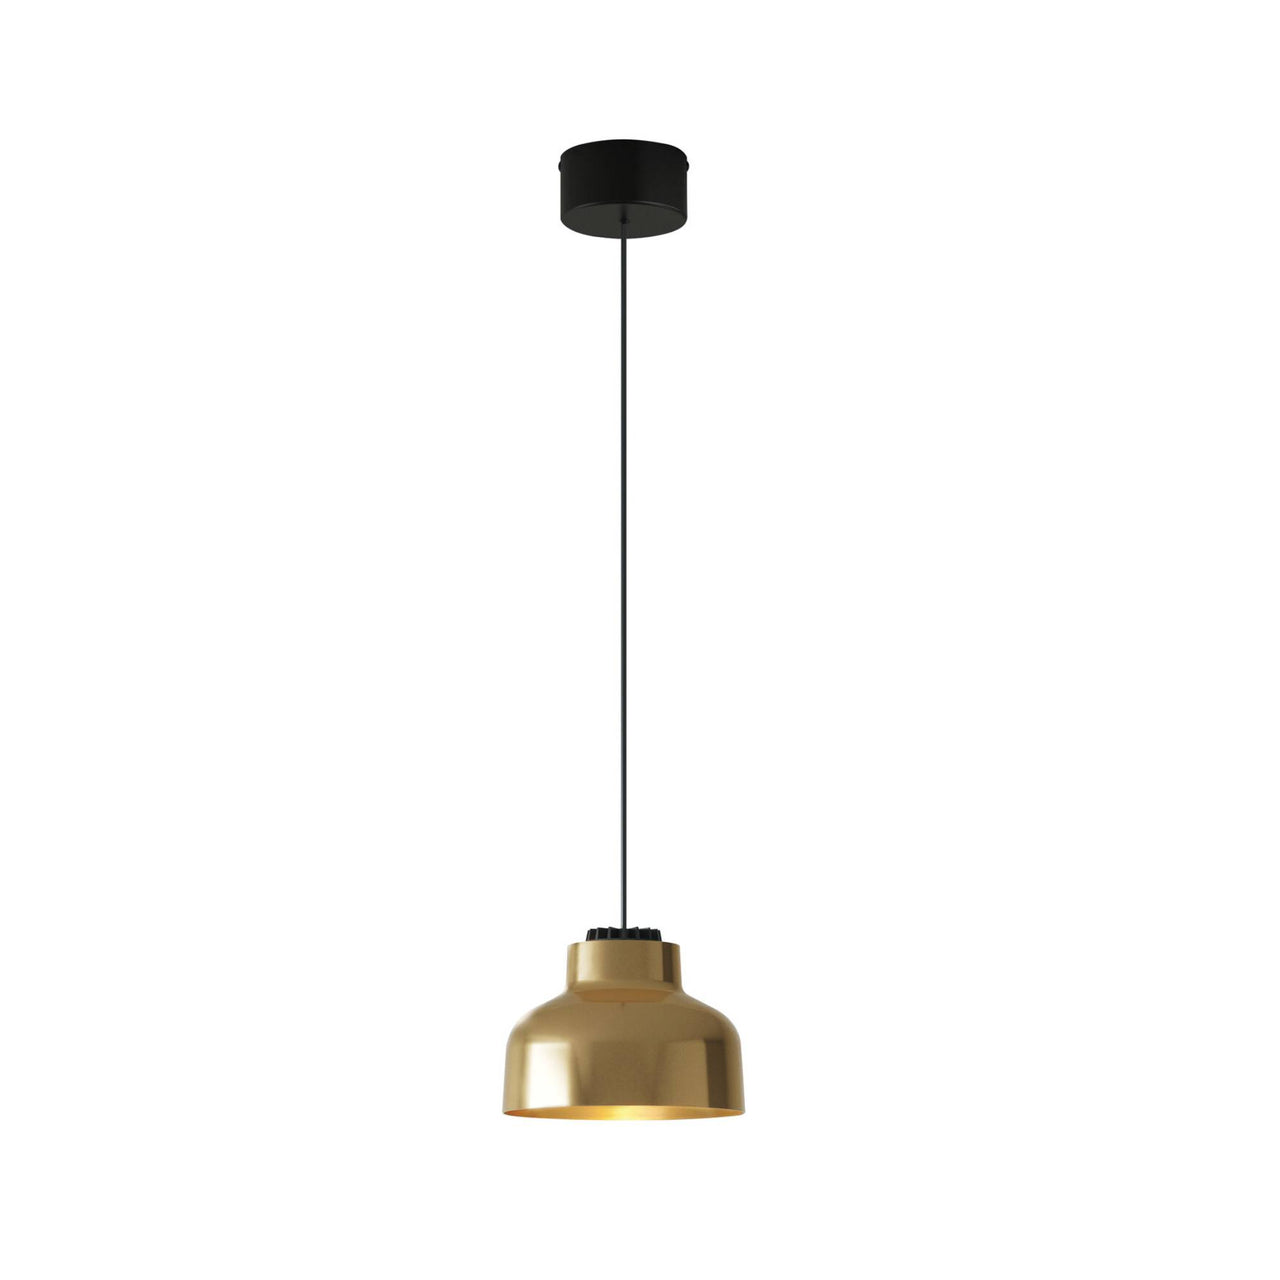 M64 Pendant Lamp: Polished Brass + Black